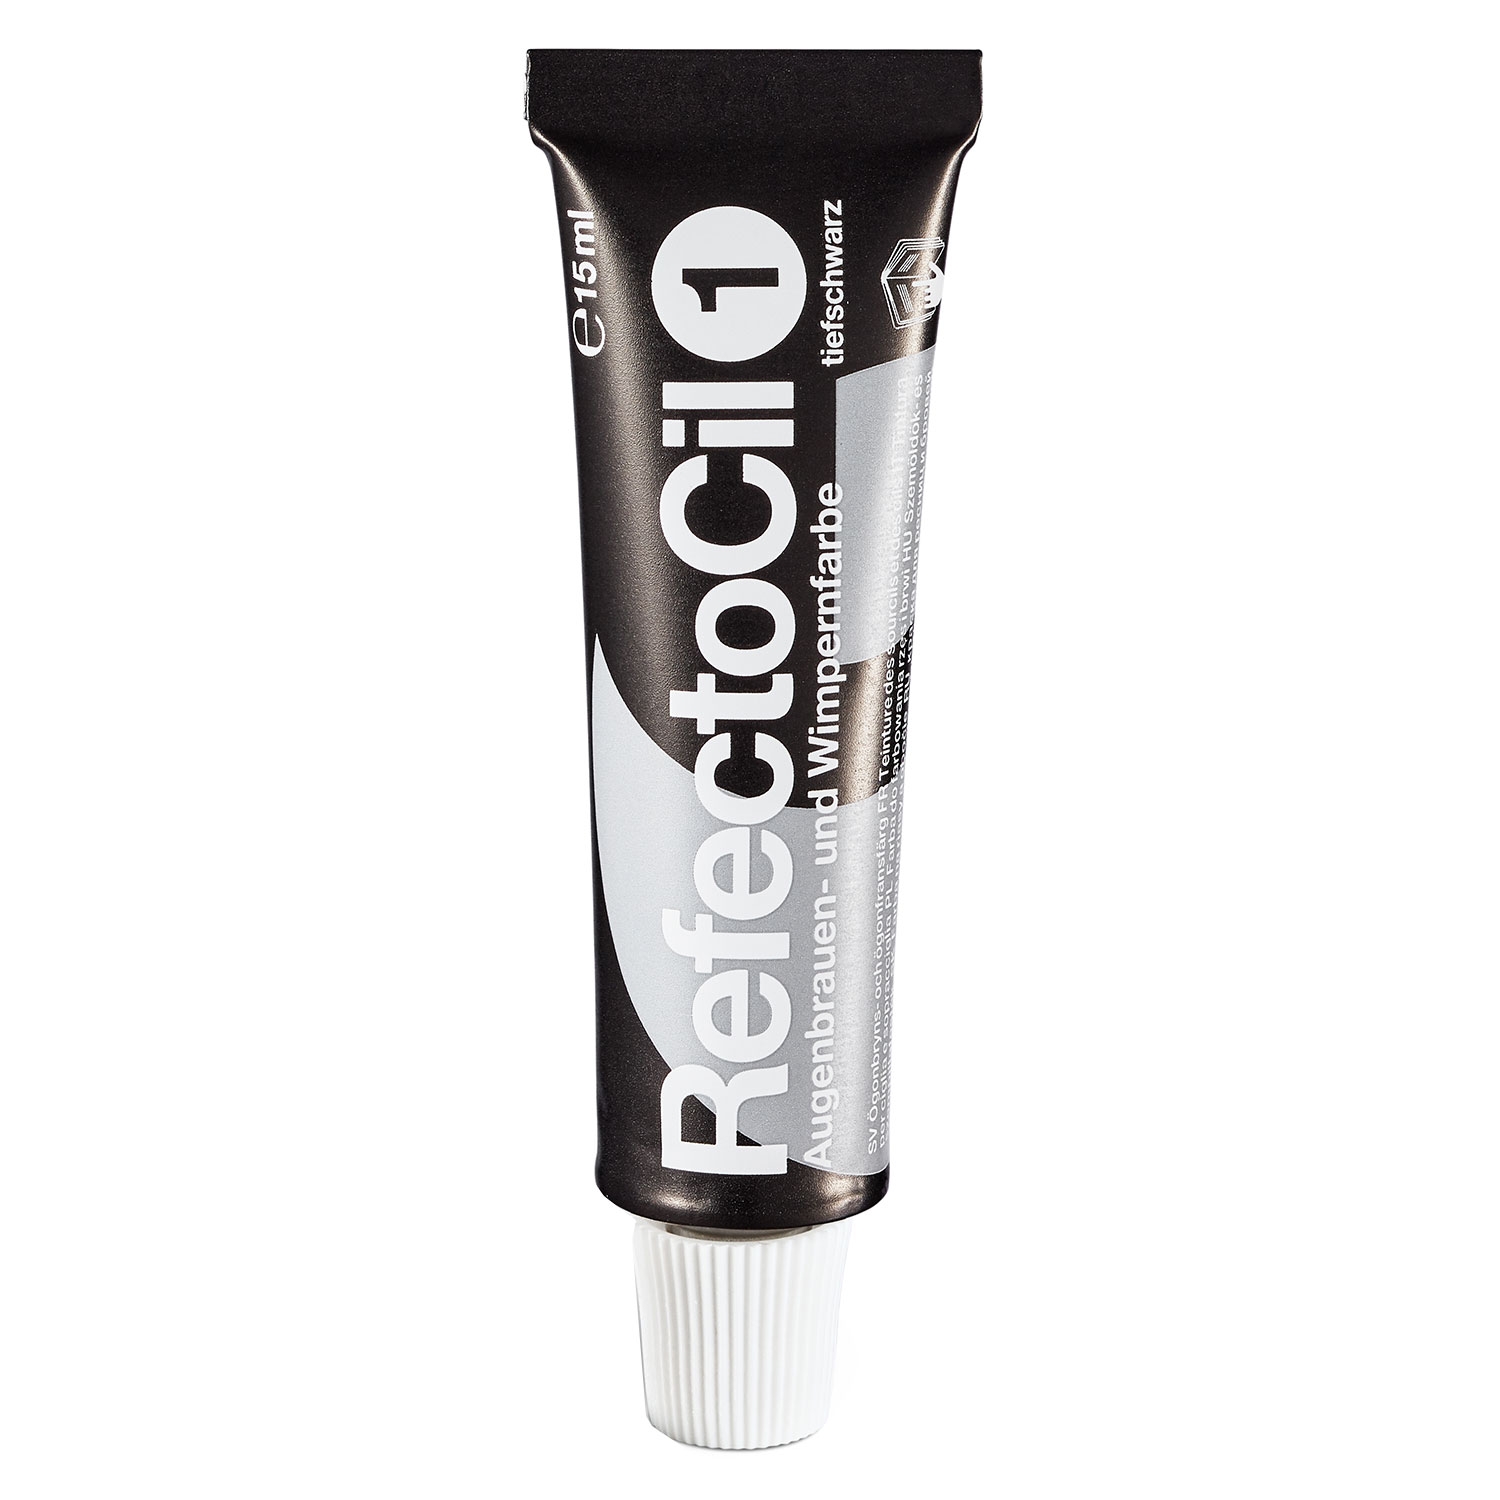 Produktbild von RefectoCil Colors - No.1 Pure Black Eyelash & Eyebrow Tint